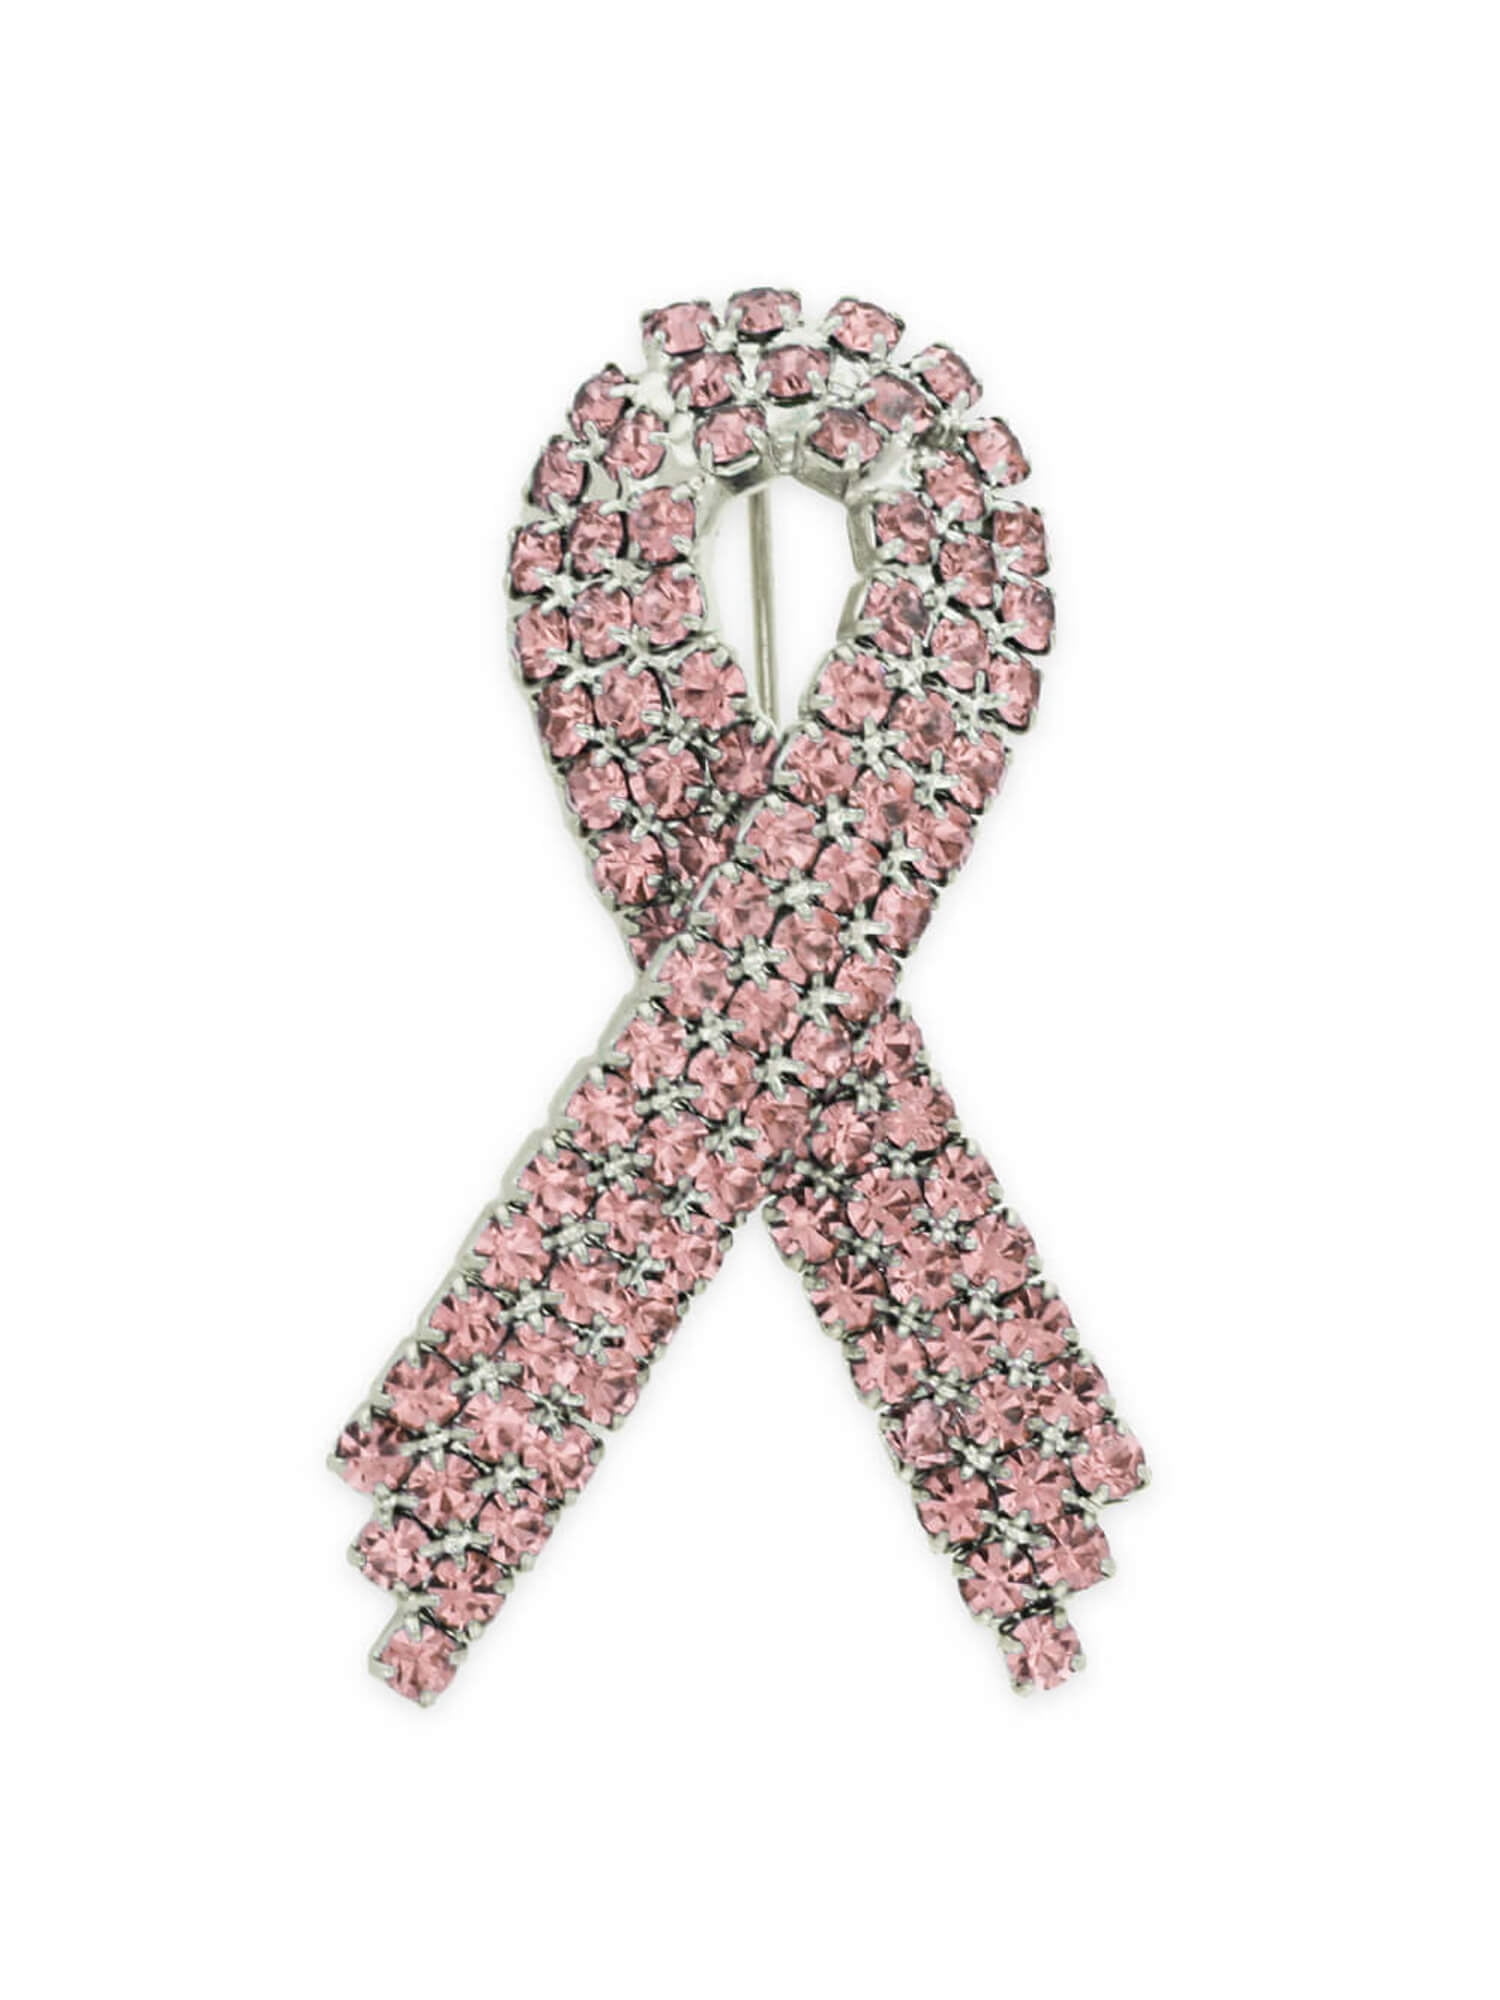 CUFFLINKS INC Think Pink Breast Cancer Awareness Tie Bar Pink